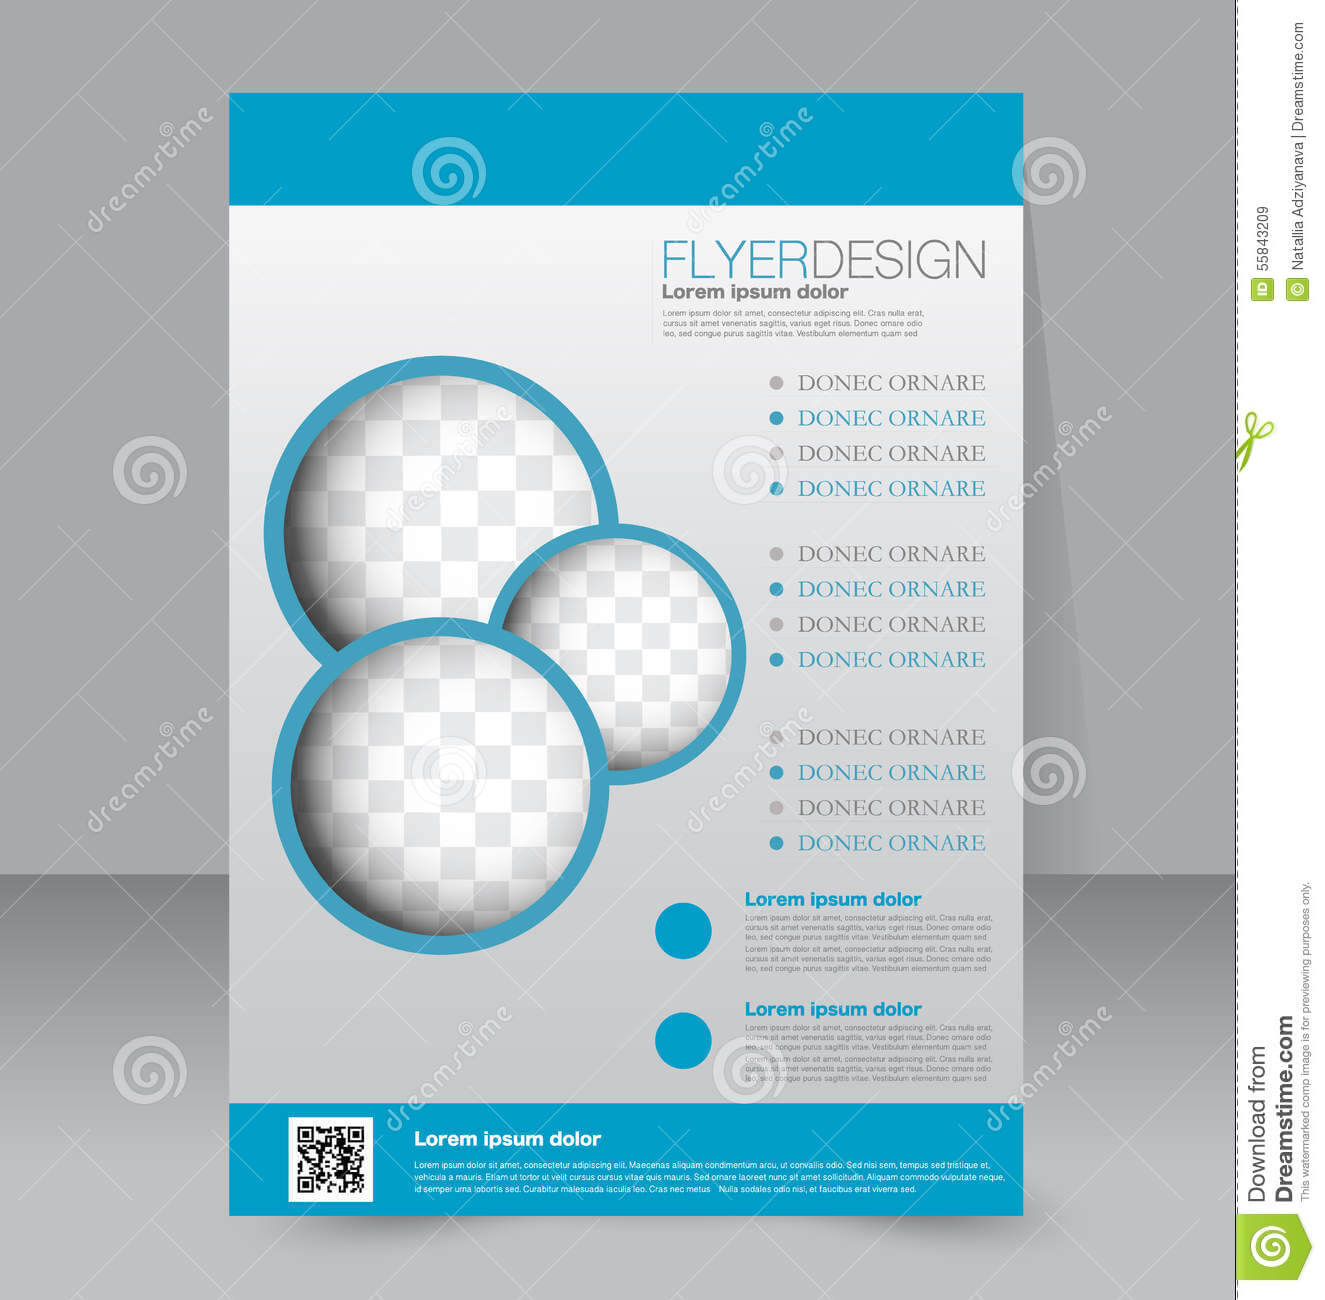 flyer-template-business-brochure-editable-a4-poster-stock-inside